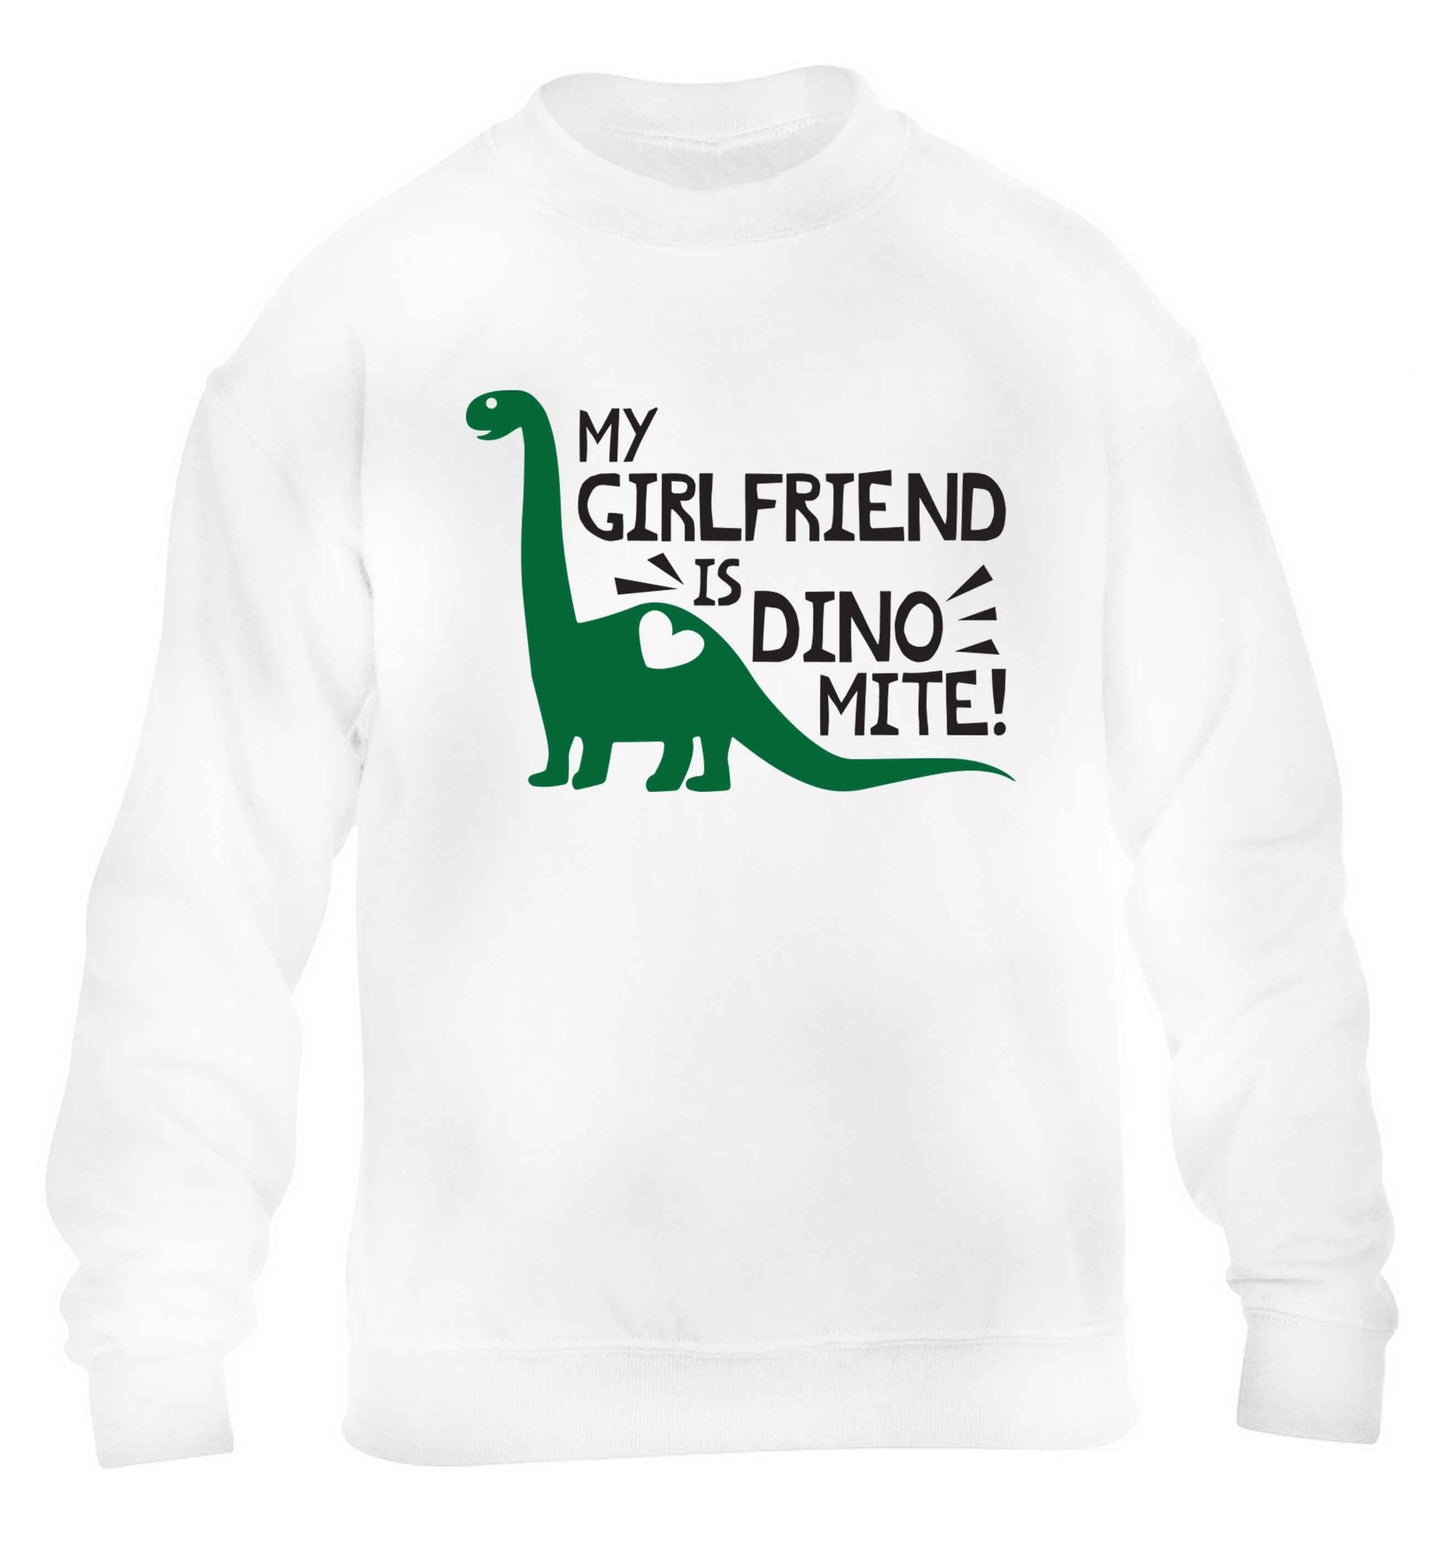 My girlfriend is dinomite! children's white sweater 12-13 Years